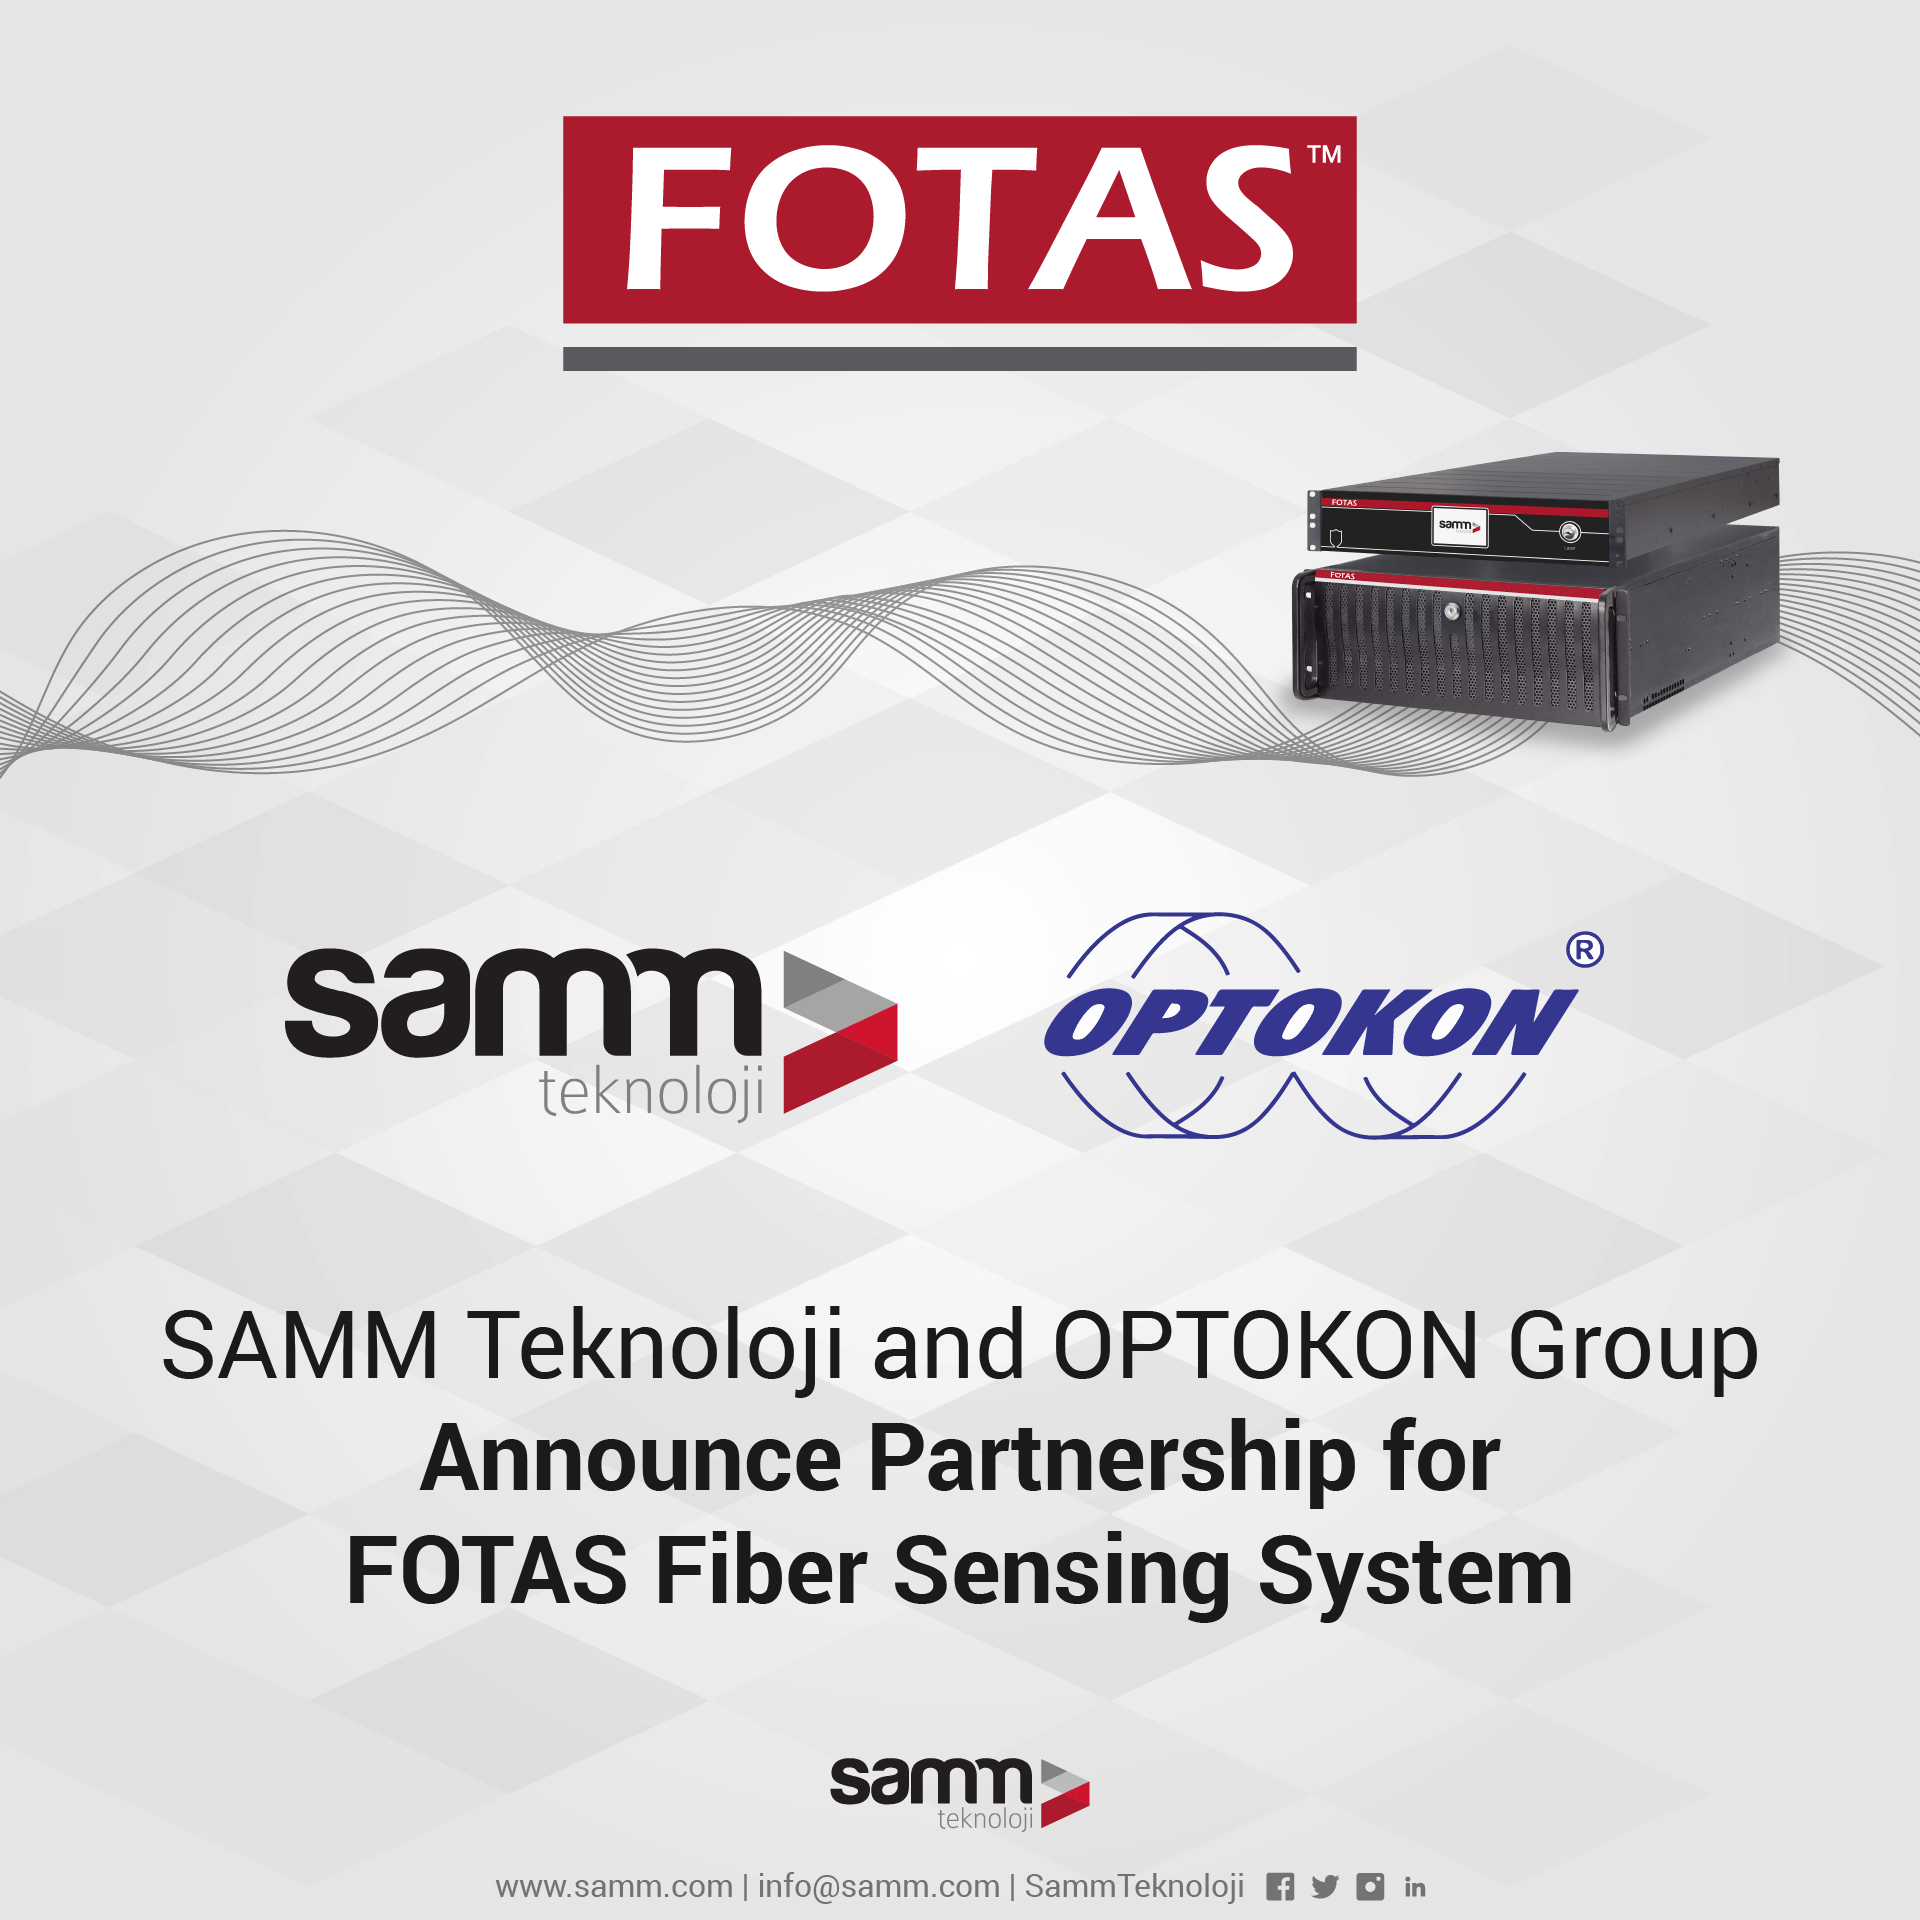 SAMM Teknoloji and OPTOKON Group Announce Partnership for FOTAS Fiber Sensing System